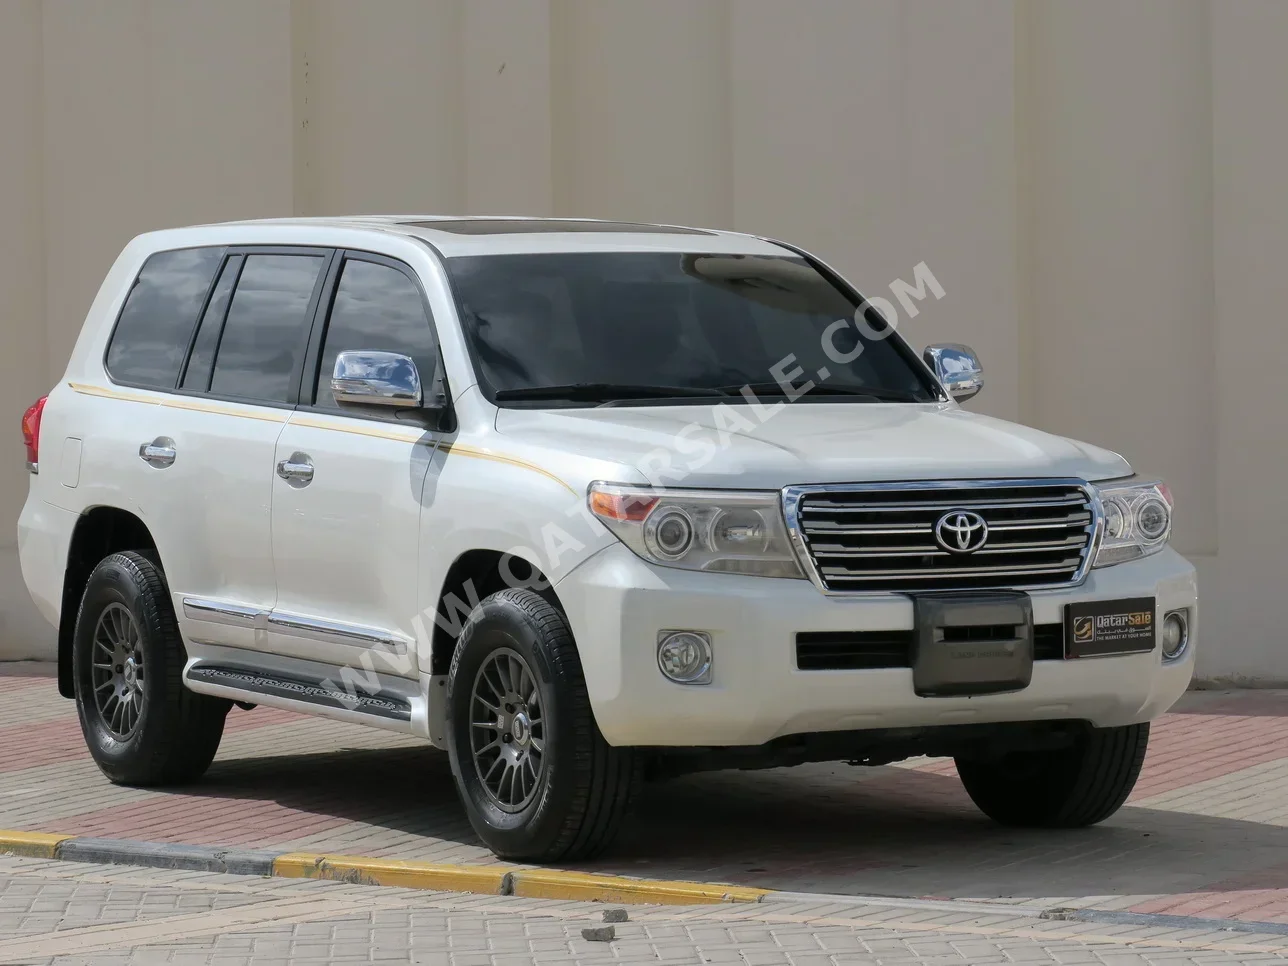 Toyota  Land Cruiser  GXR  2015  Automatic  308,000 Km  8 Cylinder  Four Wheel Drive (4WD)  SUV  White